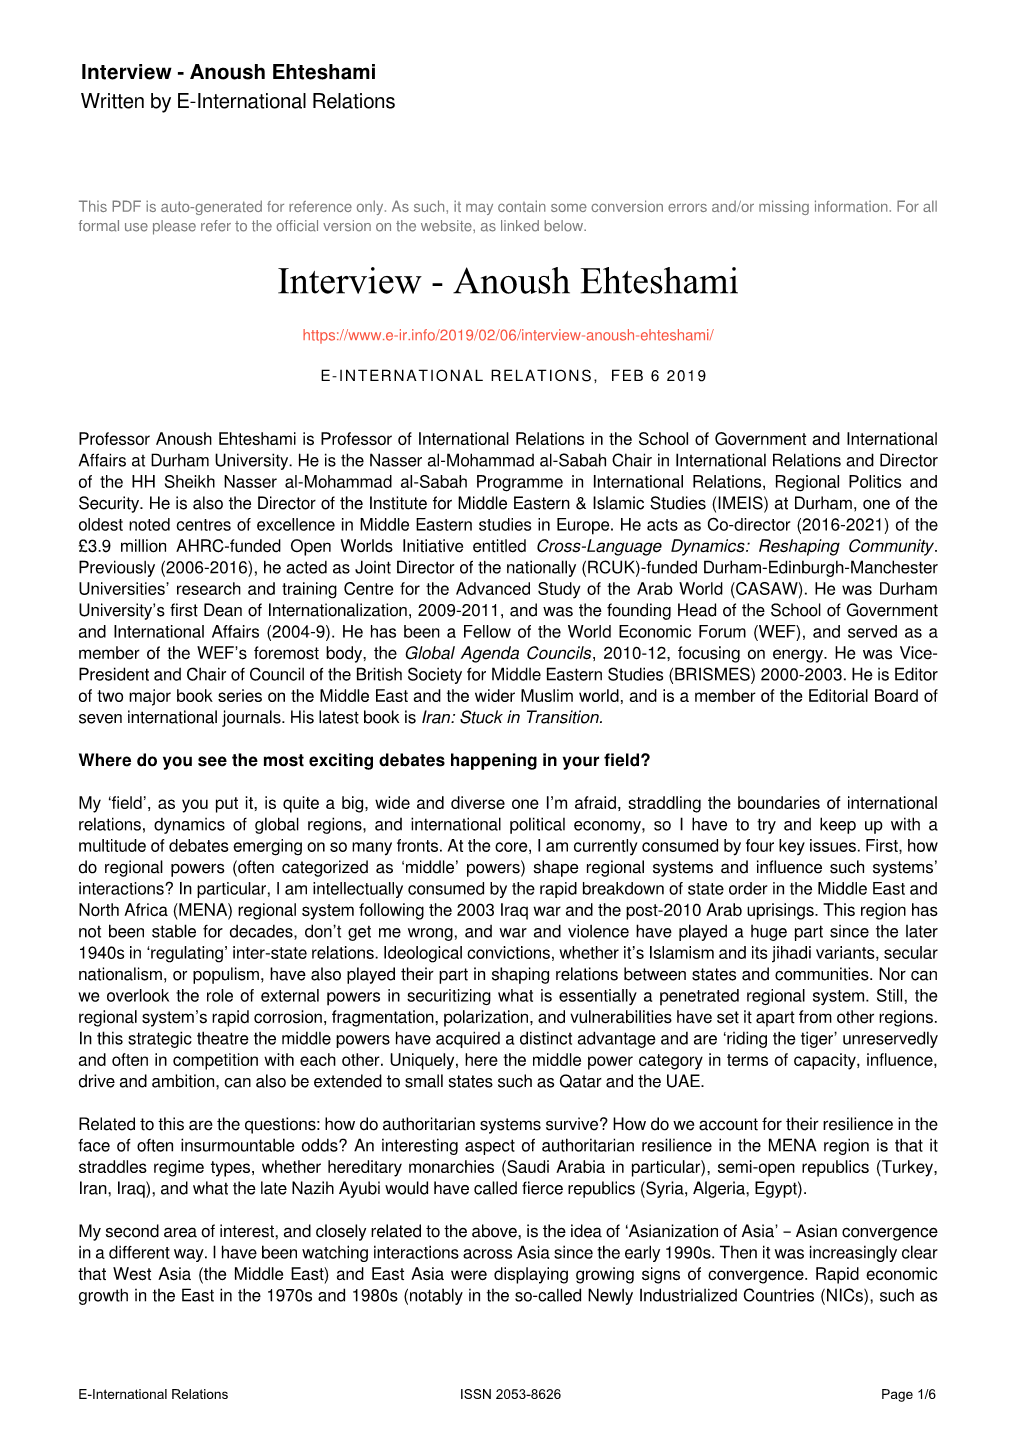 Anoush Ehteshami Written by E-International Relations